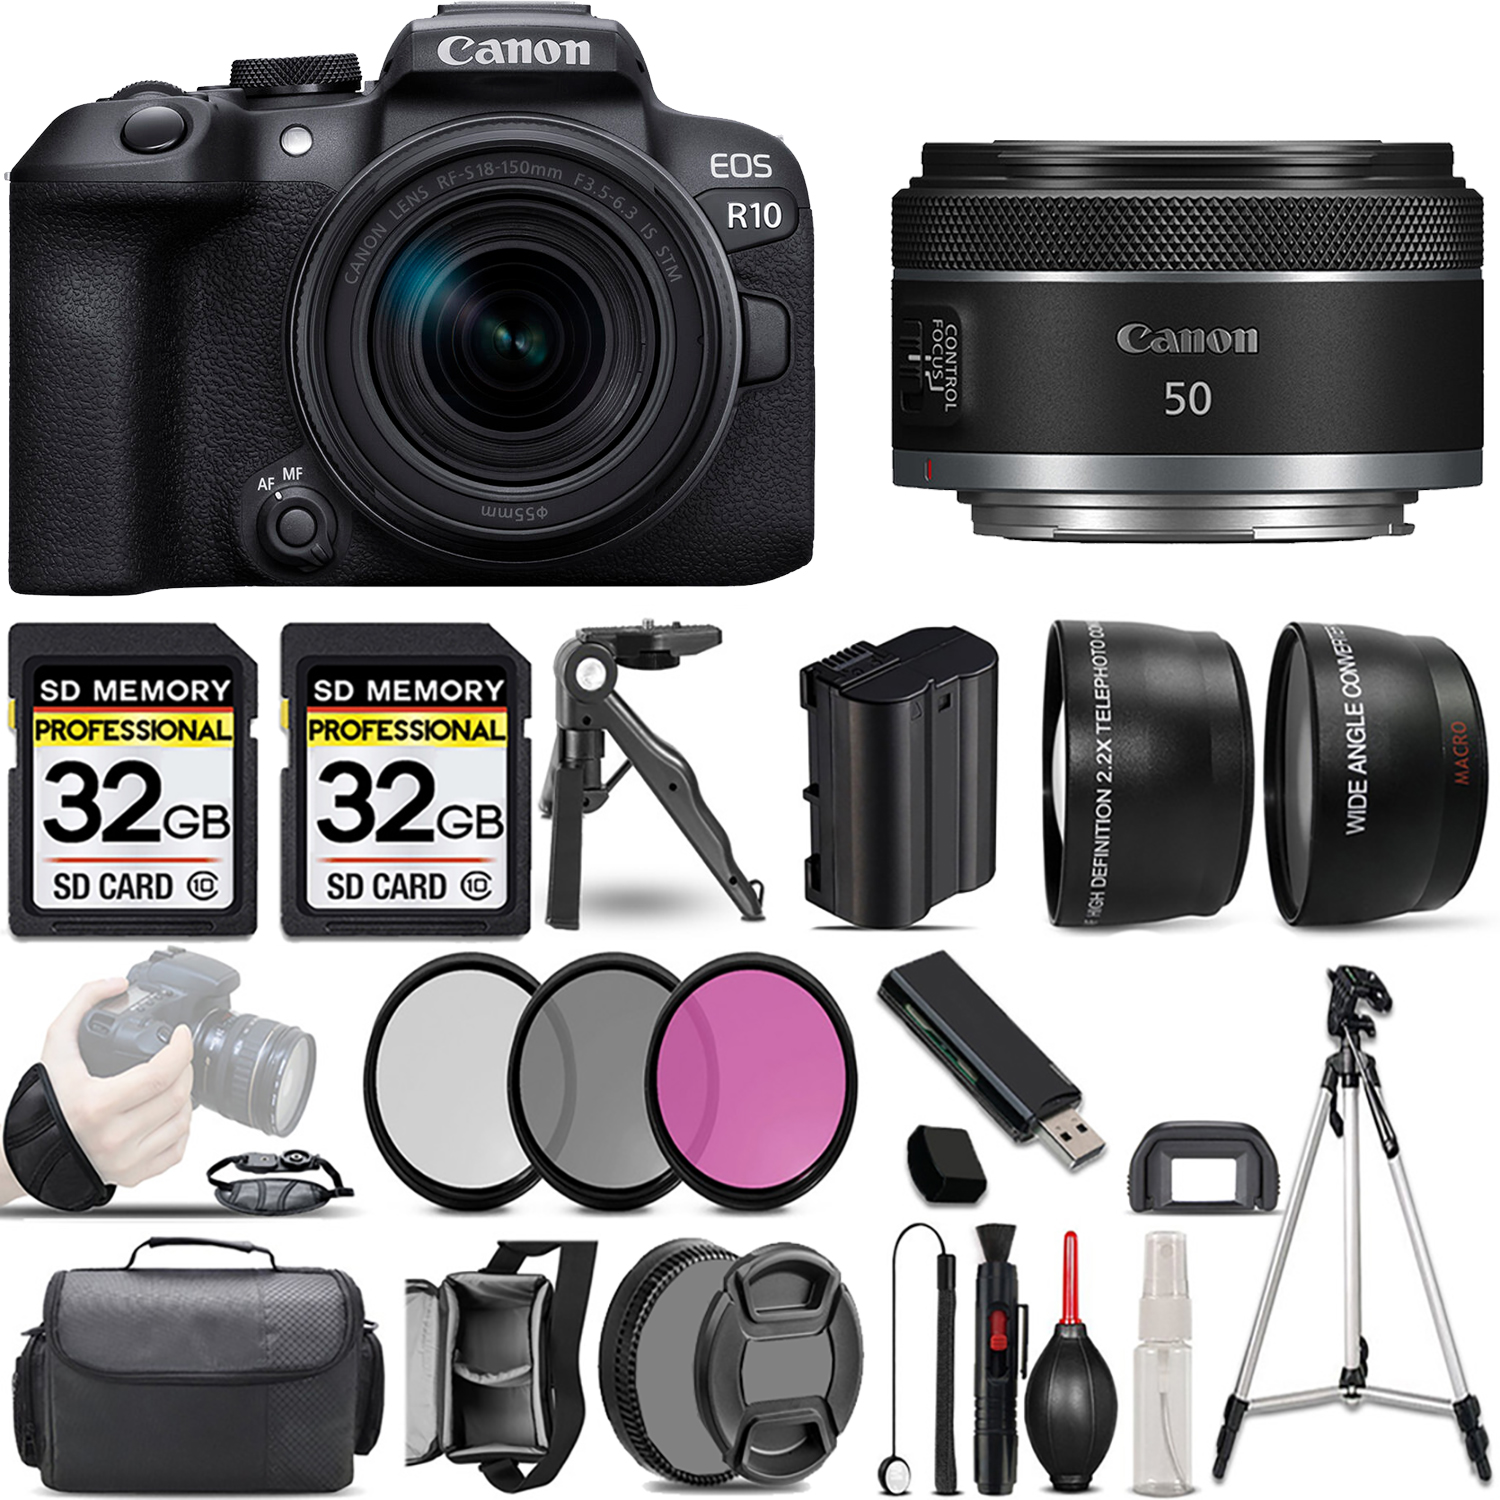 EOS R10 Camera + 18-150mm Lens + 50mm f/1.8 STM Lens + 3 Piece Filter Set + 64GB *FREE SHIPPING*